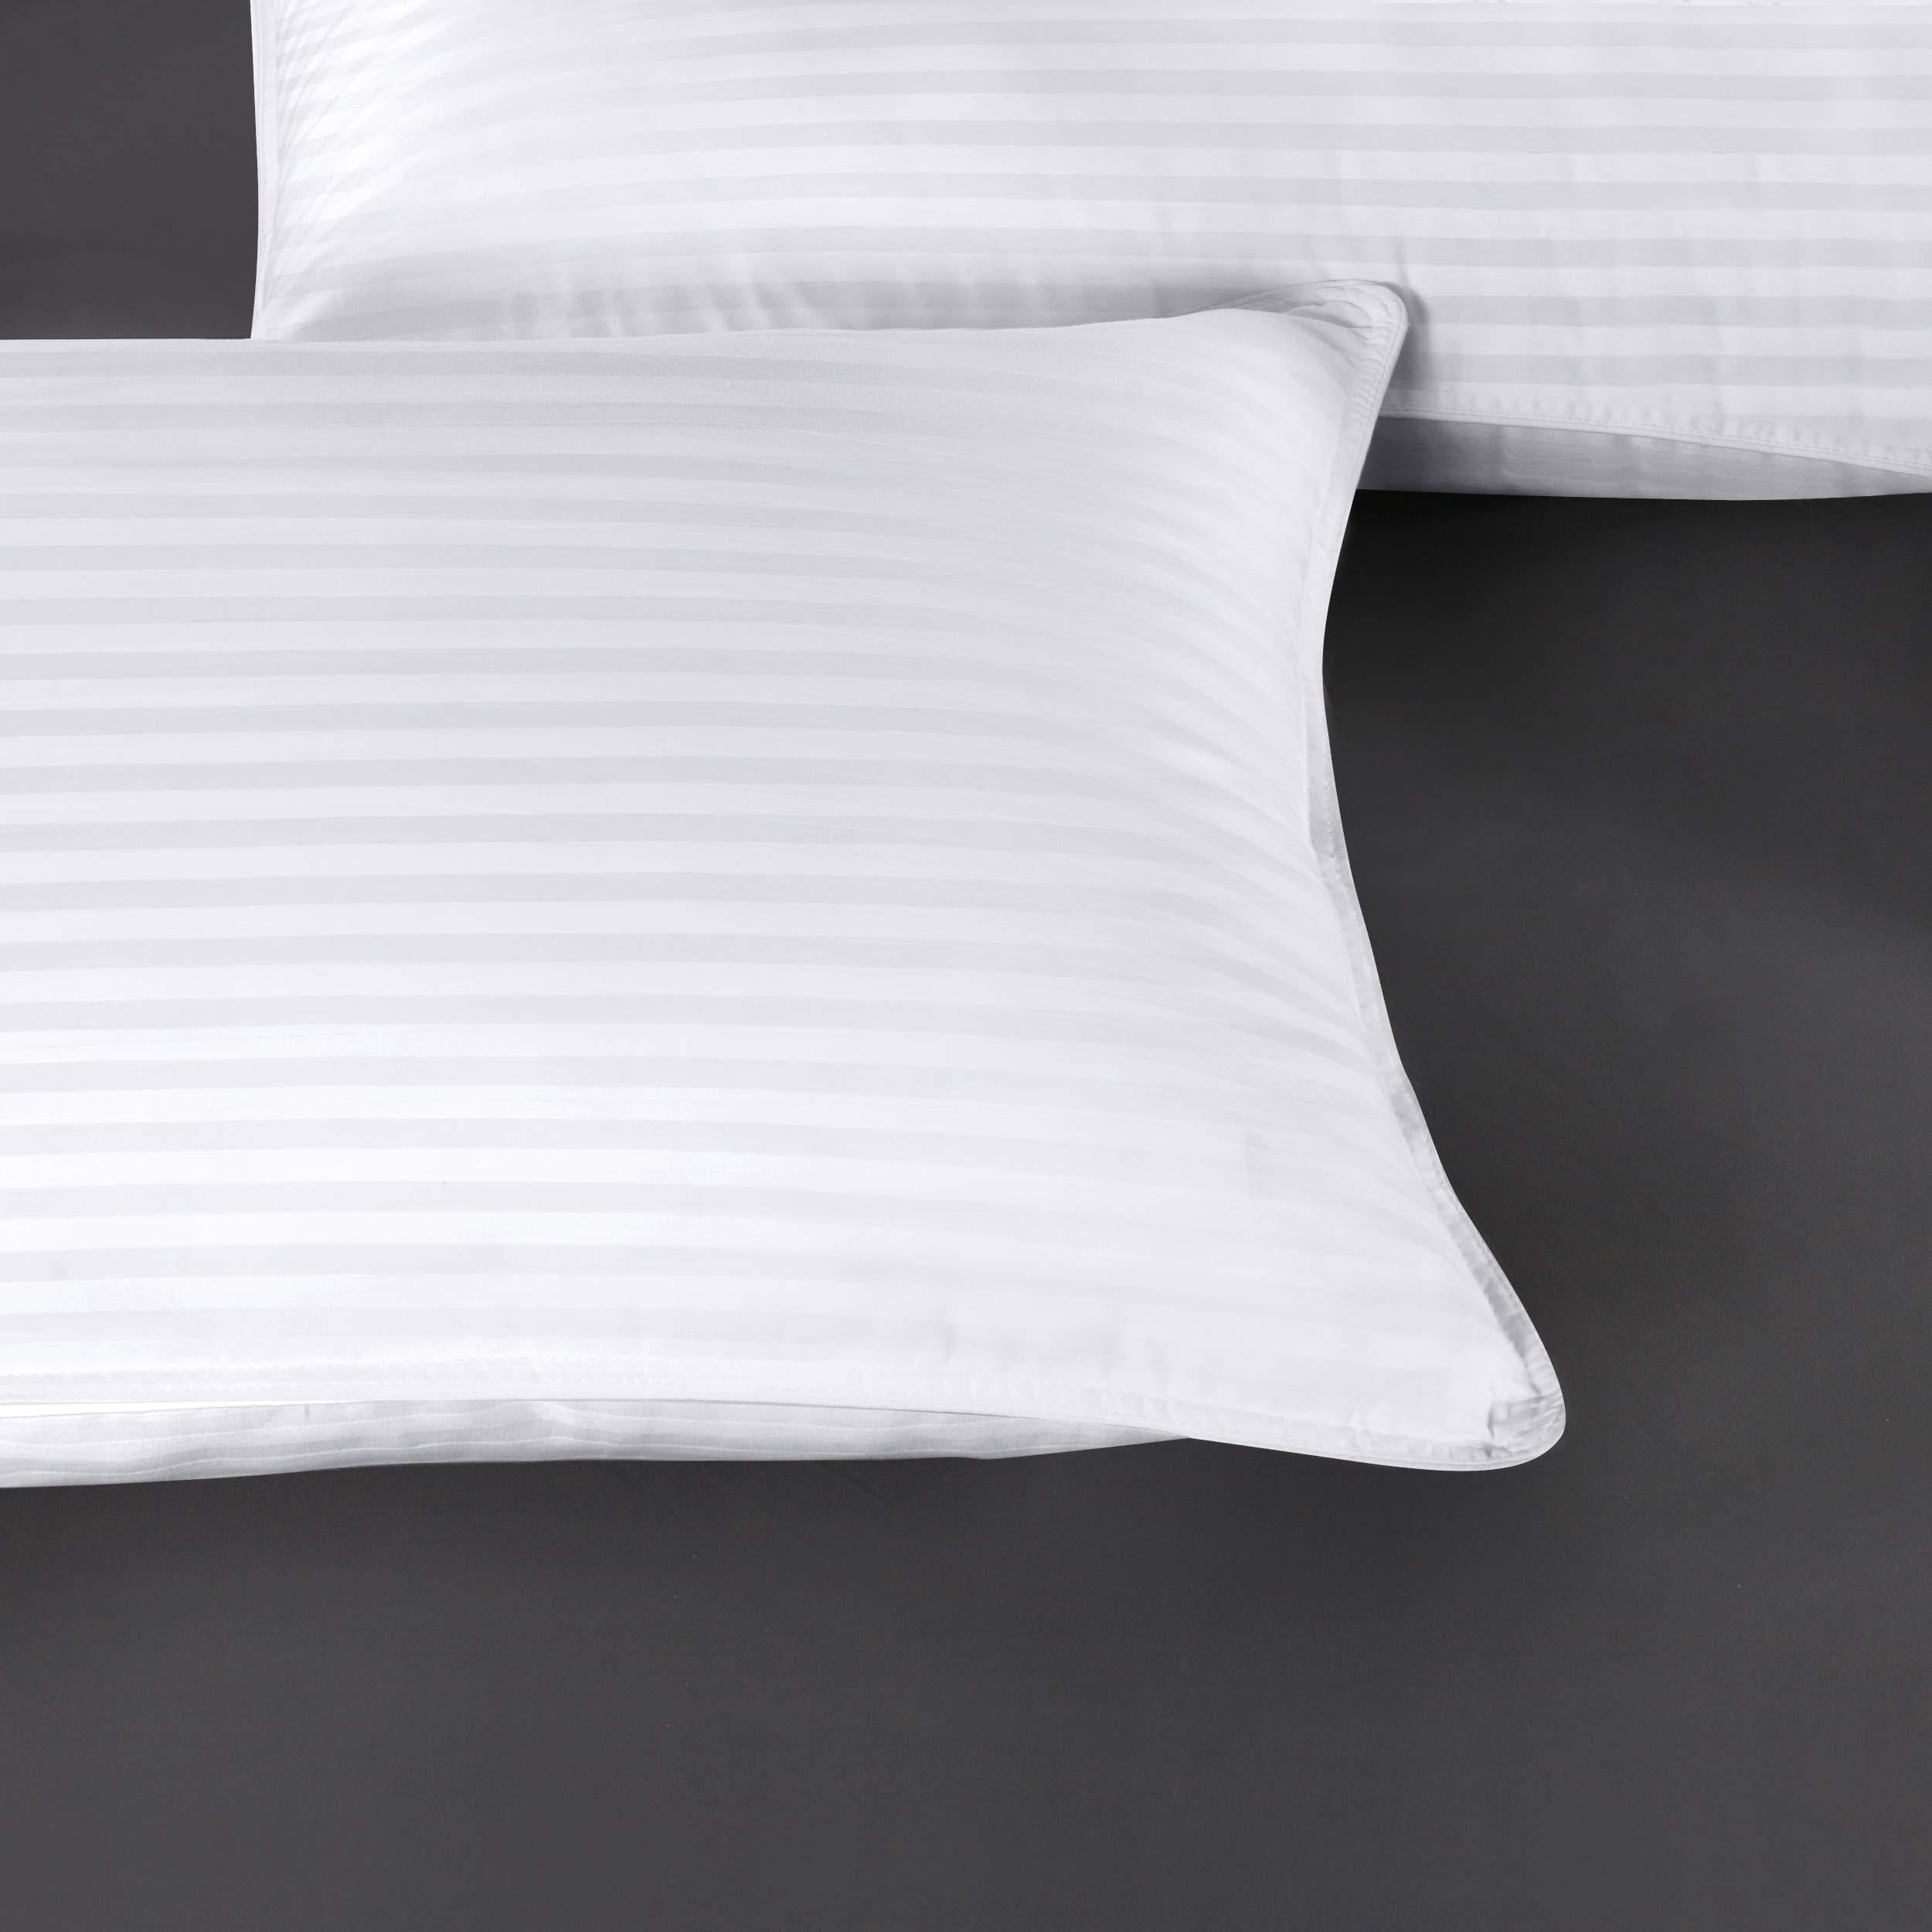 Utopia Bedding Cotton Corded Stomach Sleeper Plush Bed Pillows, Queen,  White, 2-Pieces 